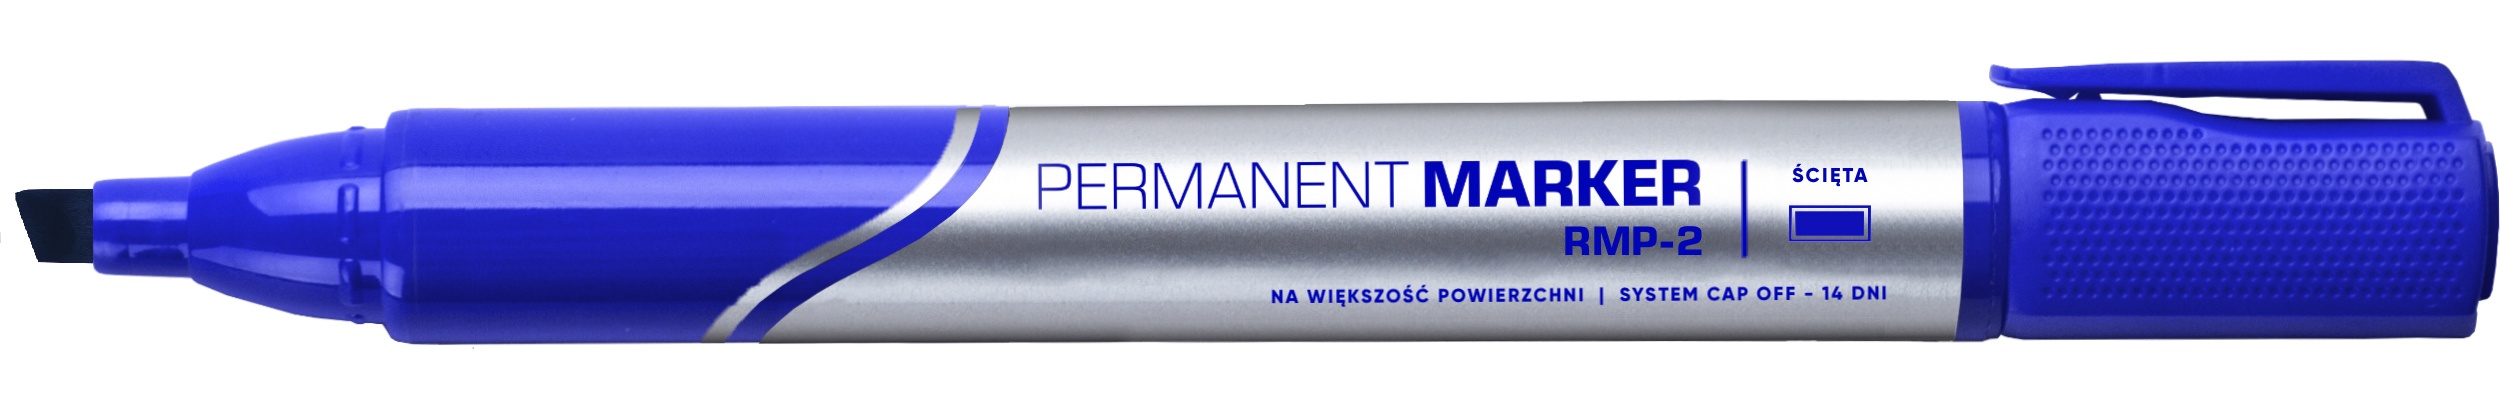 RMP-2 Permanent Marker